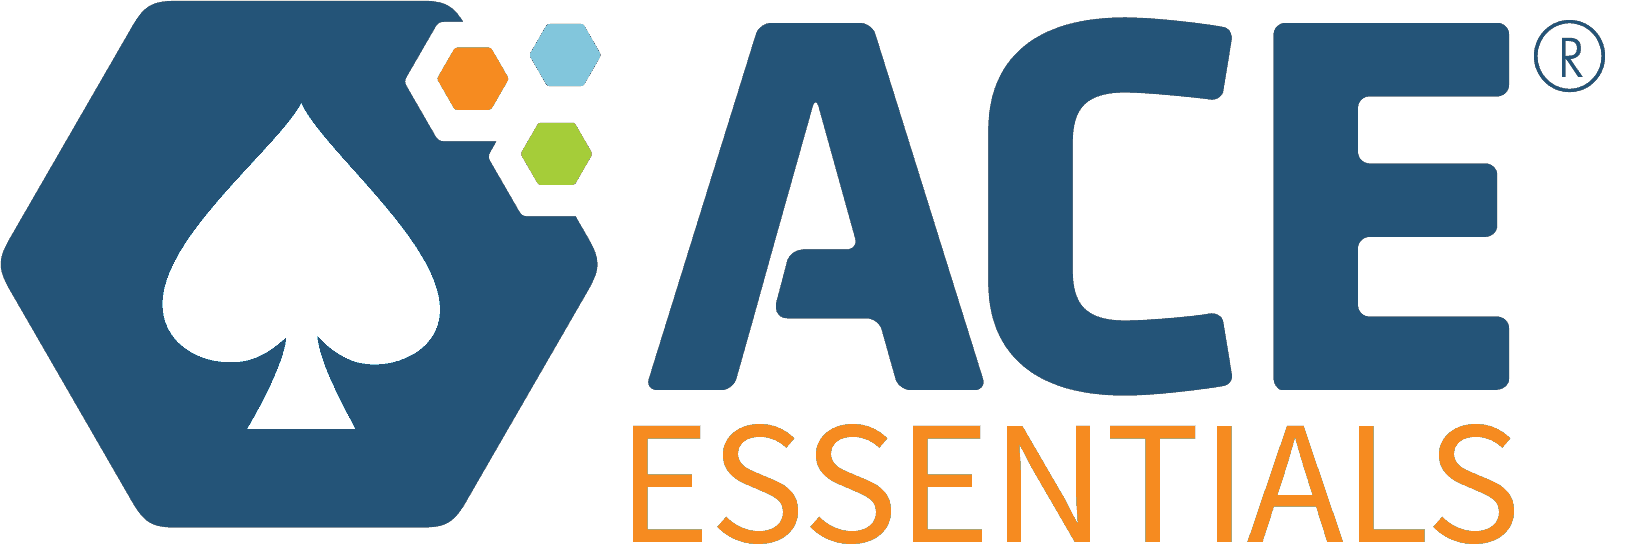 ACE Essentials Logo resized